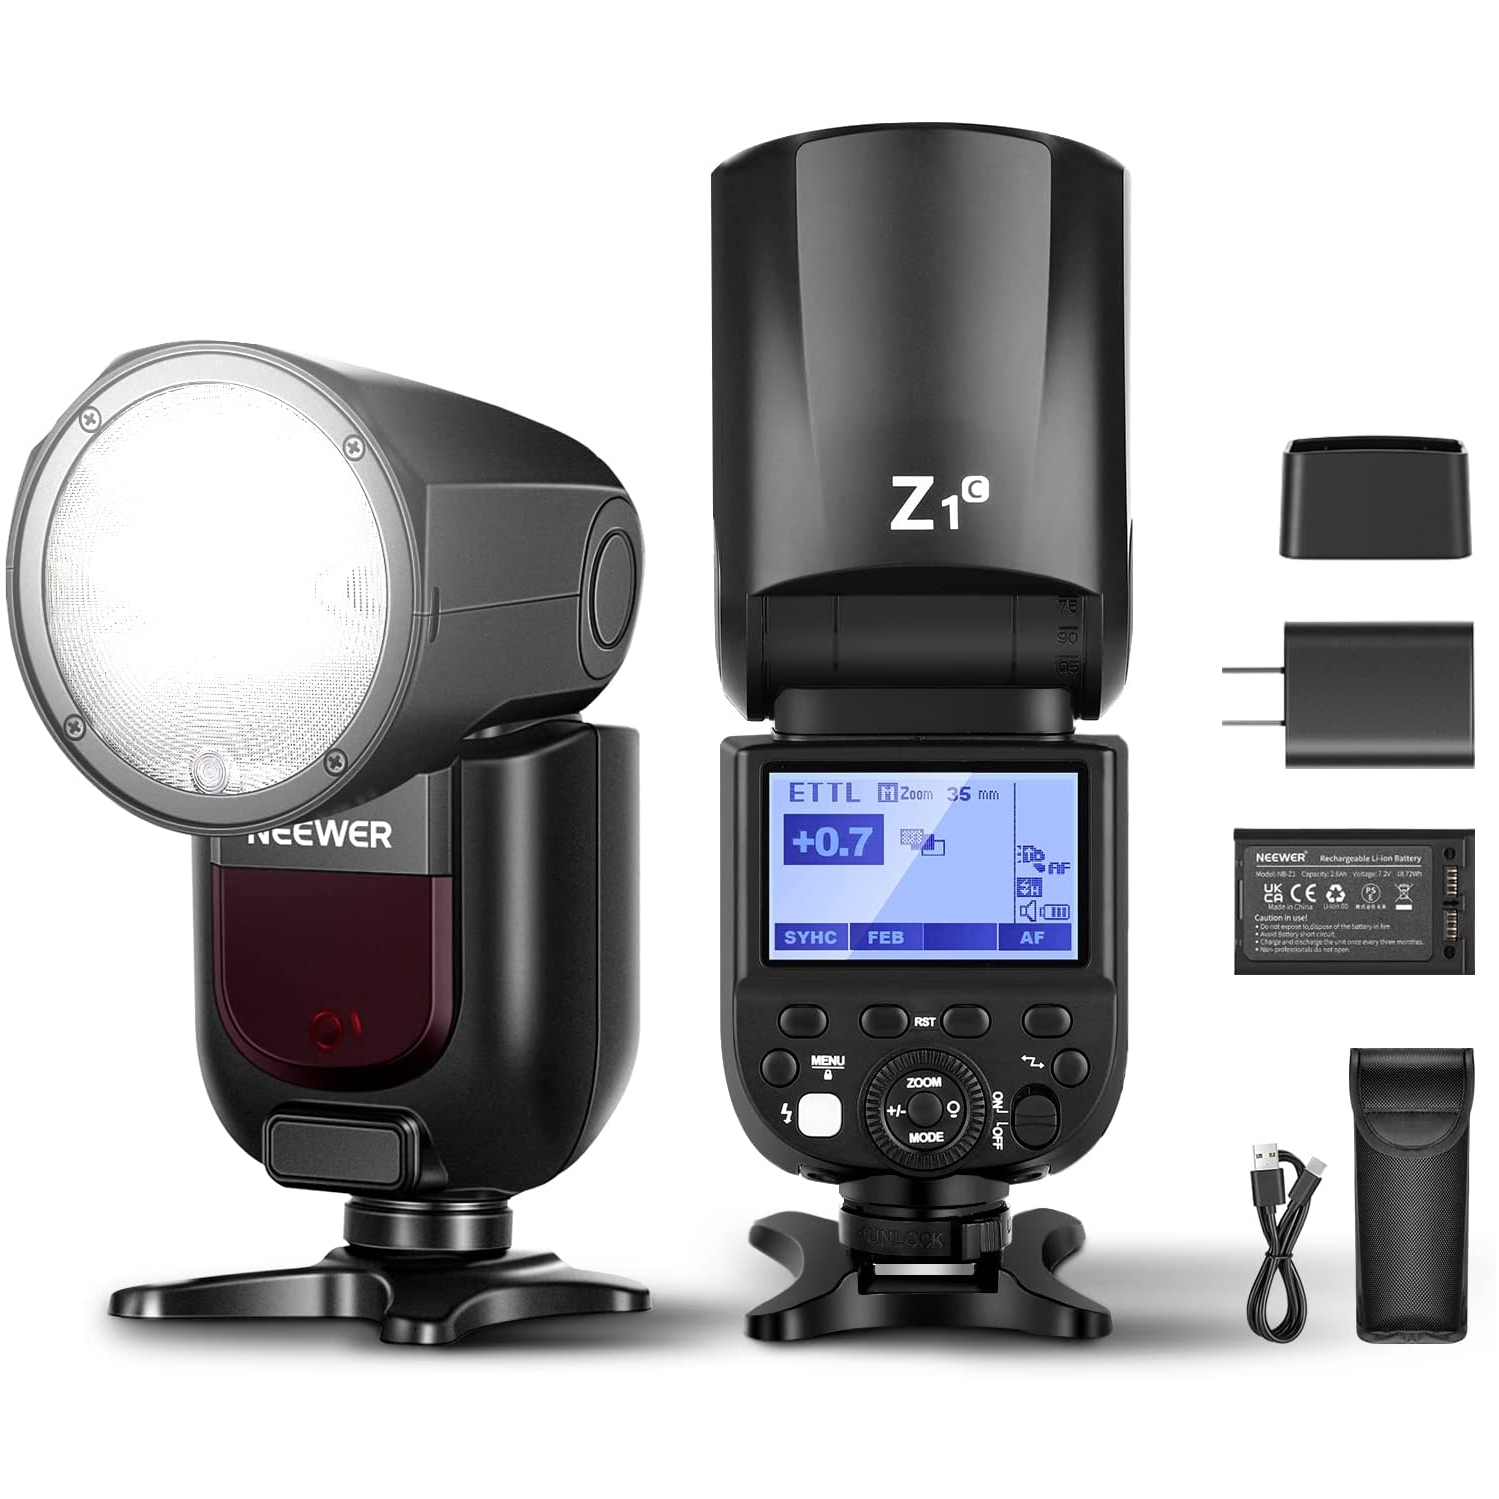 Open Box - NEEWER Z1-C TTL Round Head Flash Speedlite for Canon DSLR Cameras, 76Ws 2.4G 1/8000s HSS, 10 Levels LED Modeling Lamp